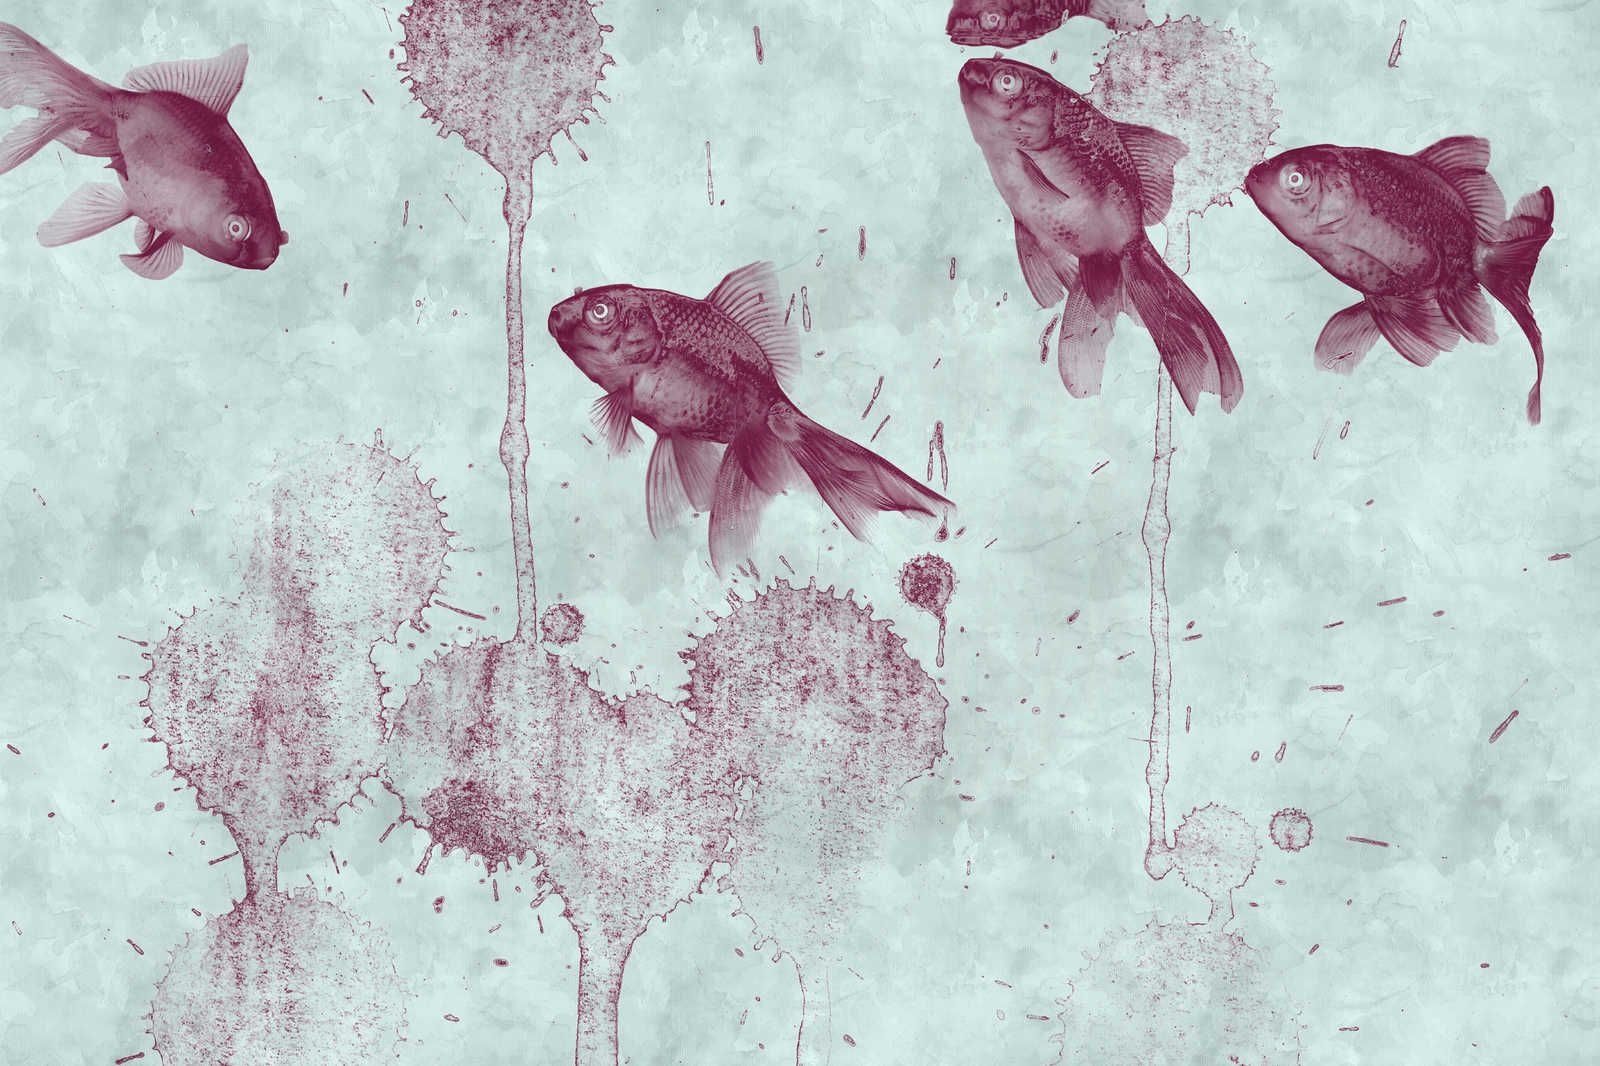             Modernes Leinwandbild Fisch Design im Aquarell Stil – 1,20 m x 0,80 m
        